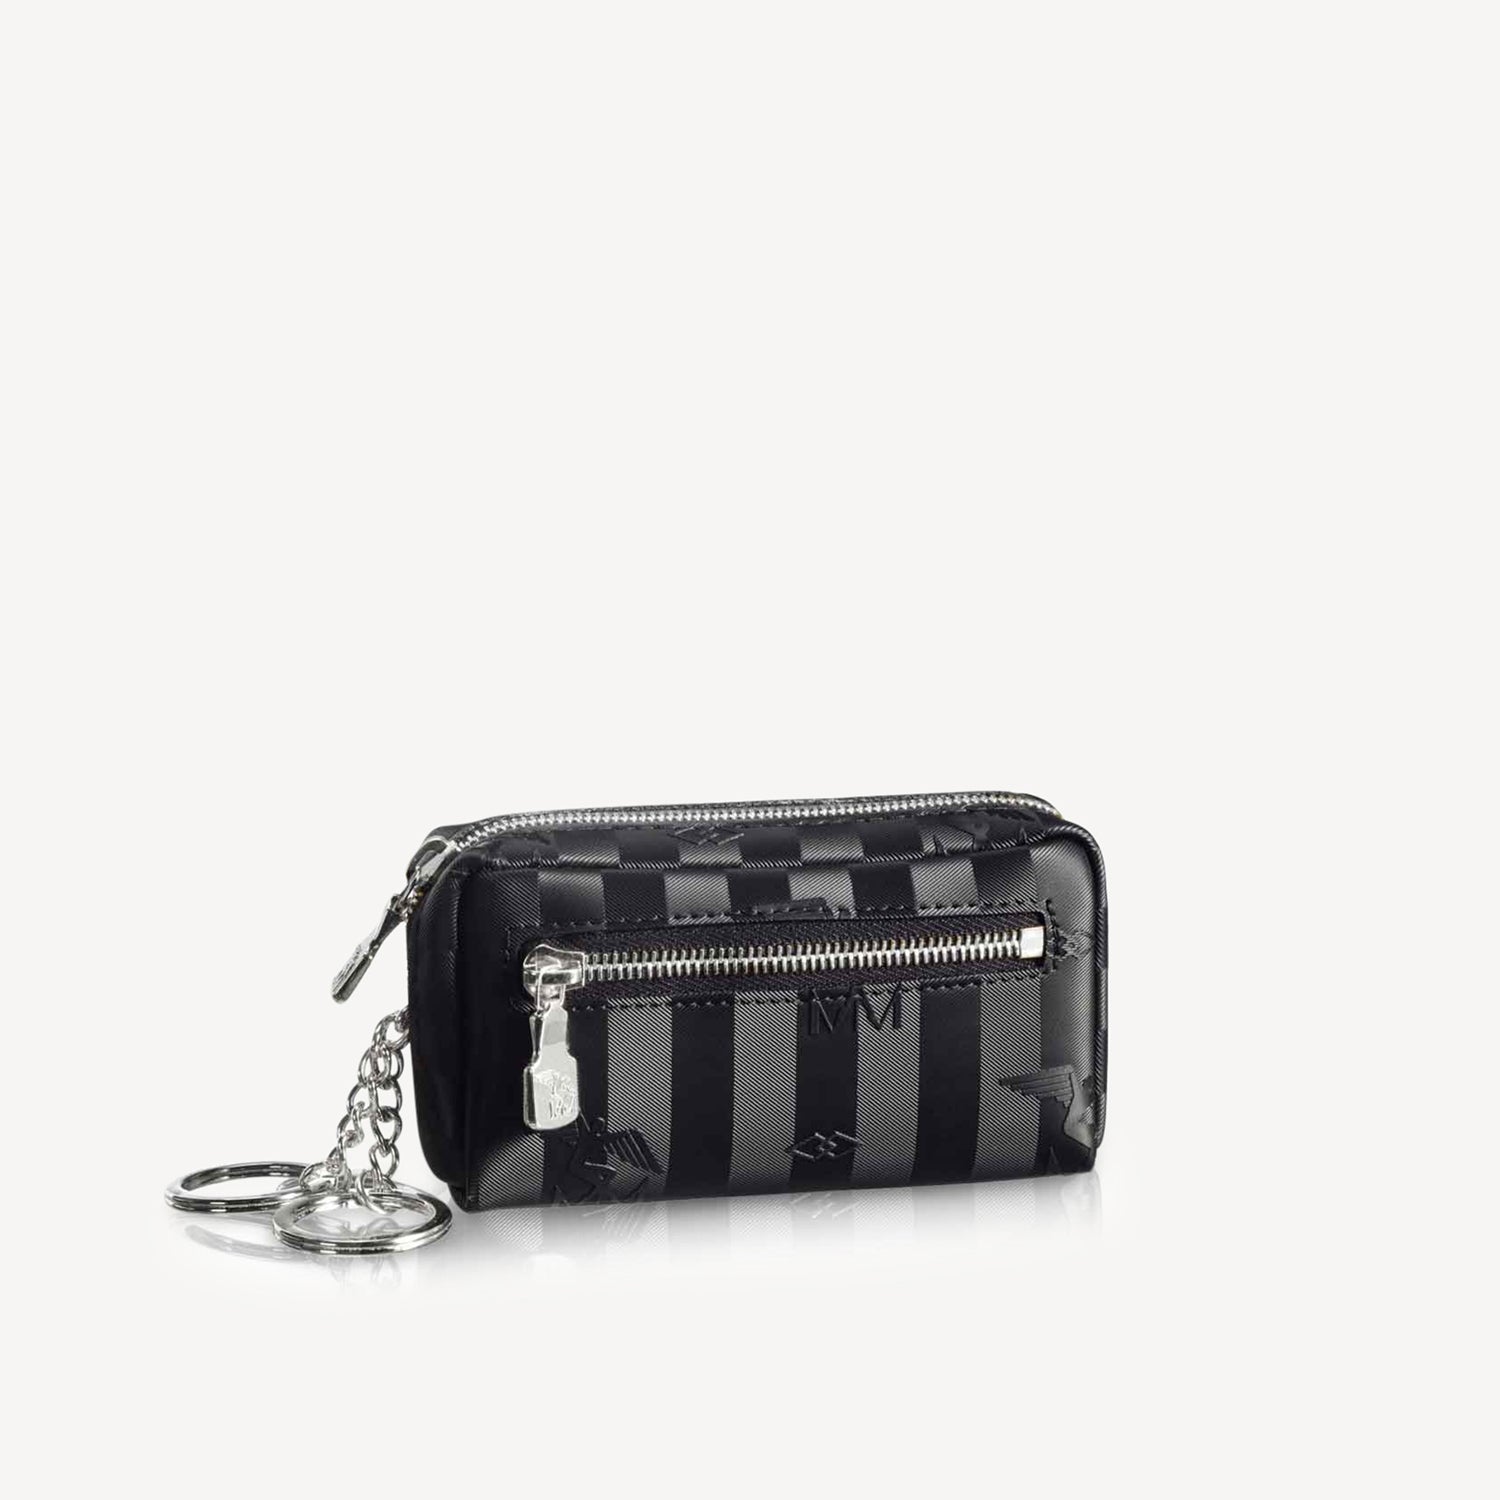 DOM | key case black/silver